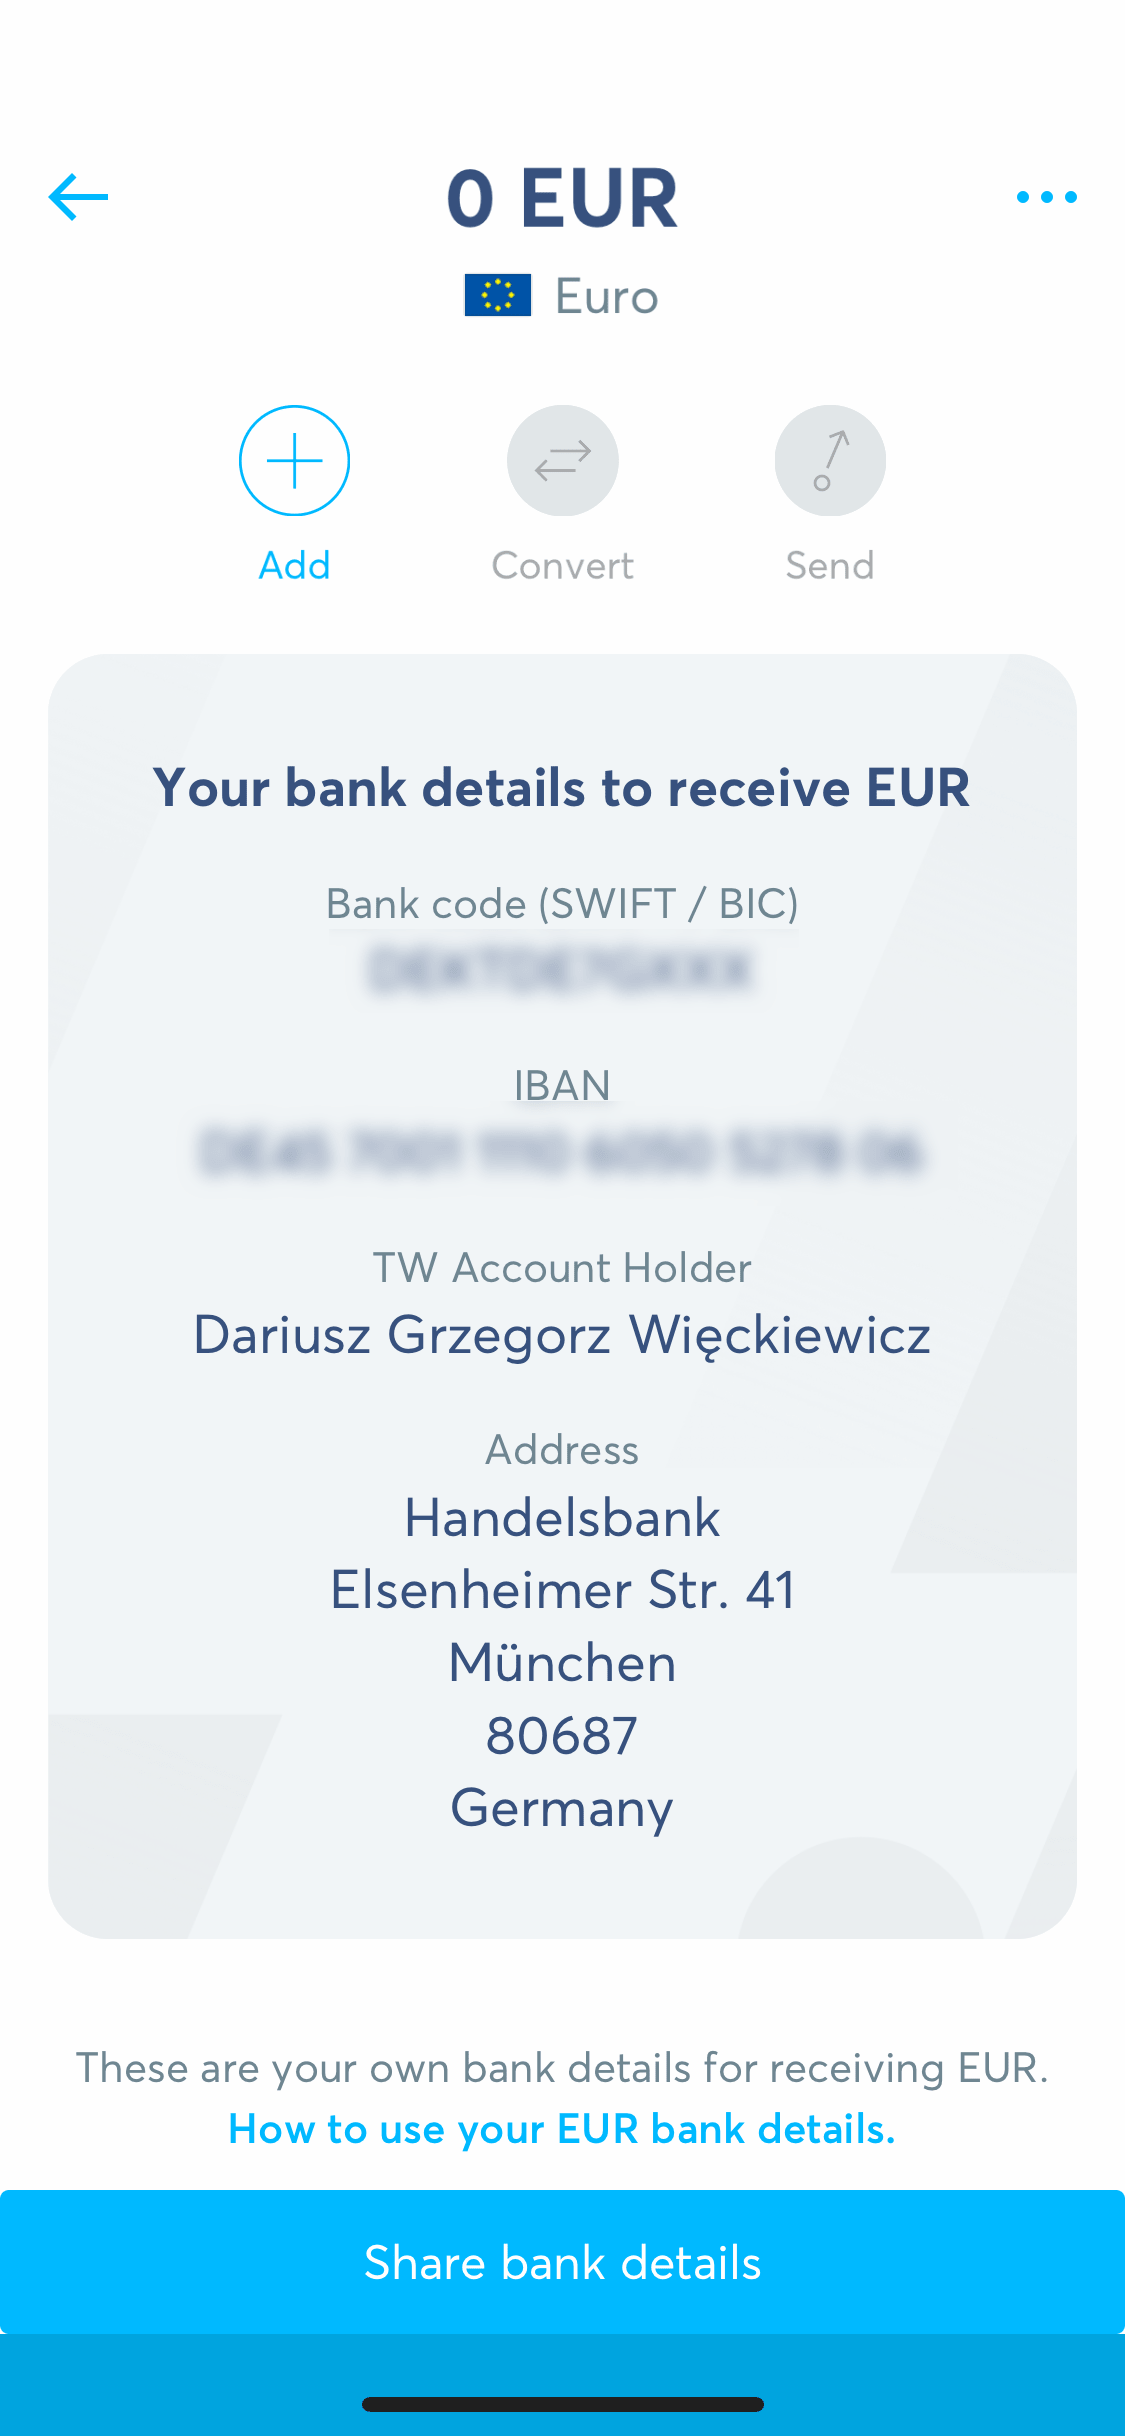 EUR Wise Bank Details